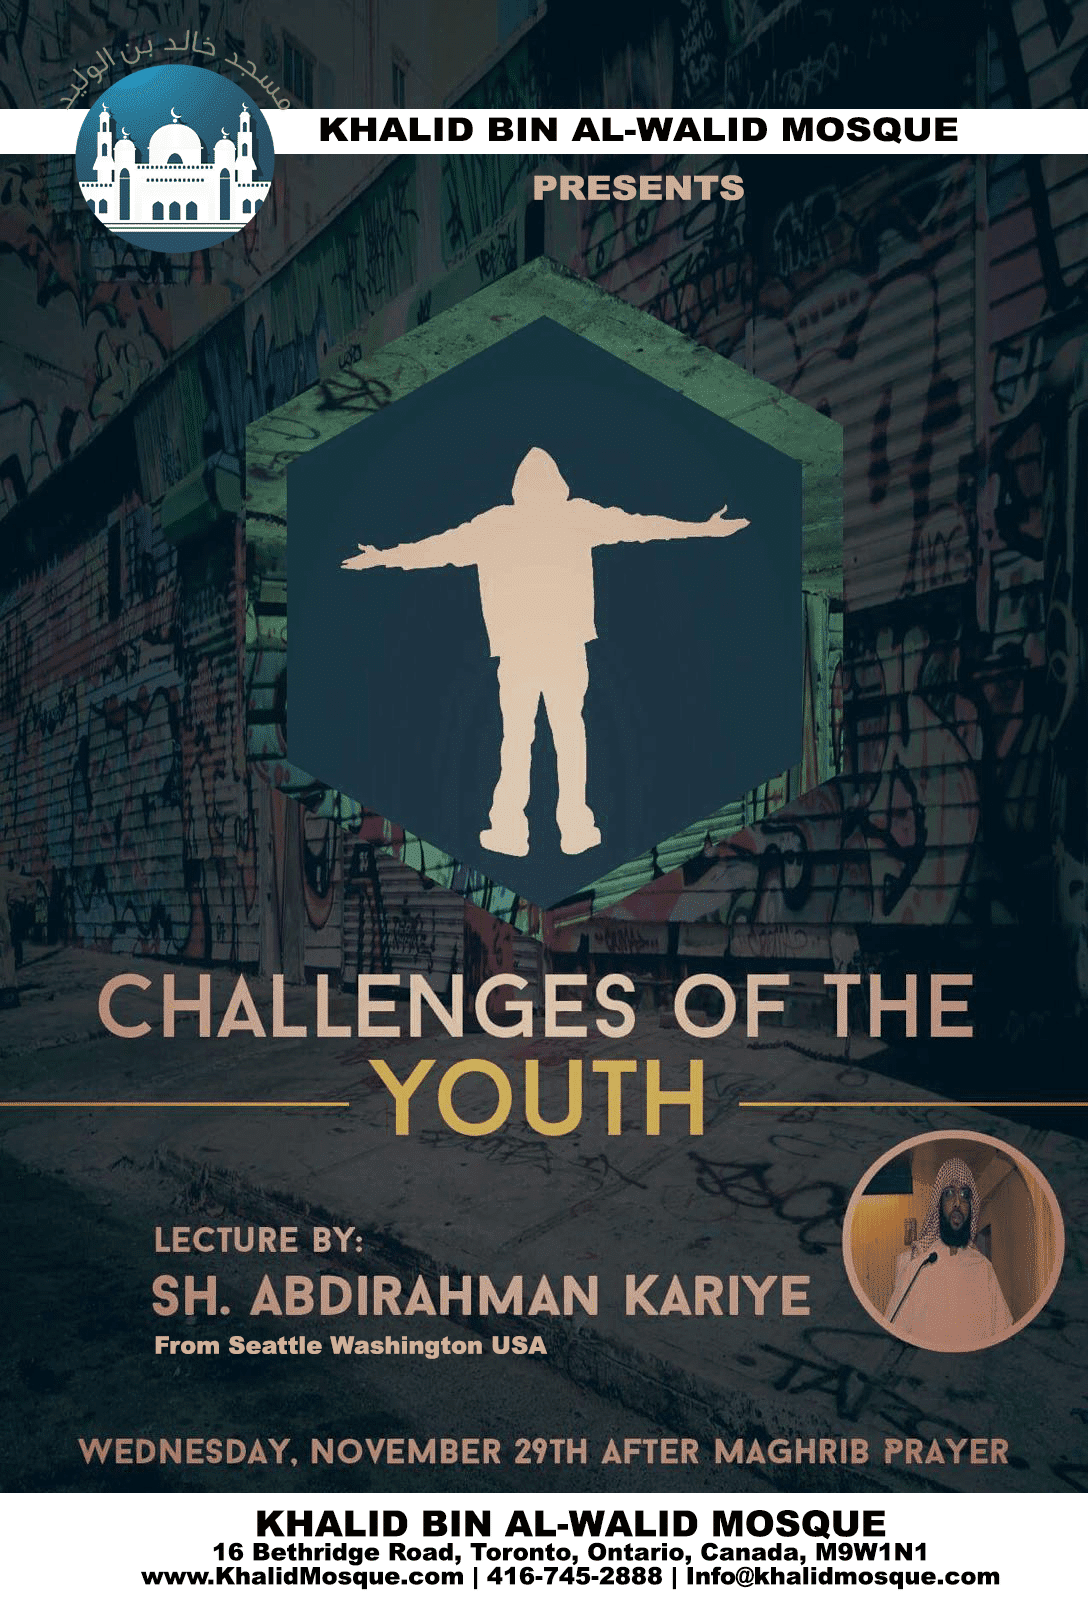 Challenges of the Youth by Sh. Abdirahman Kariye